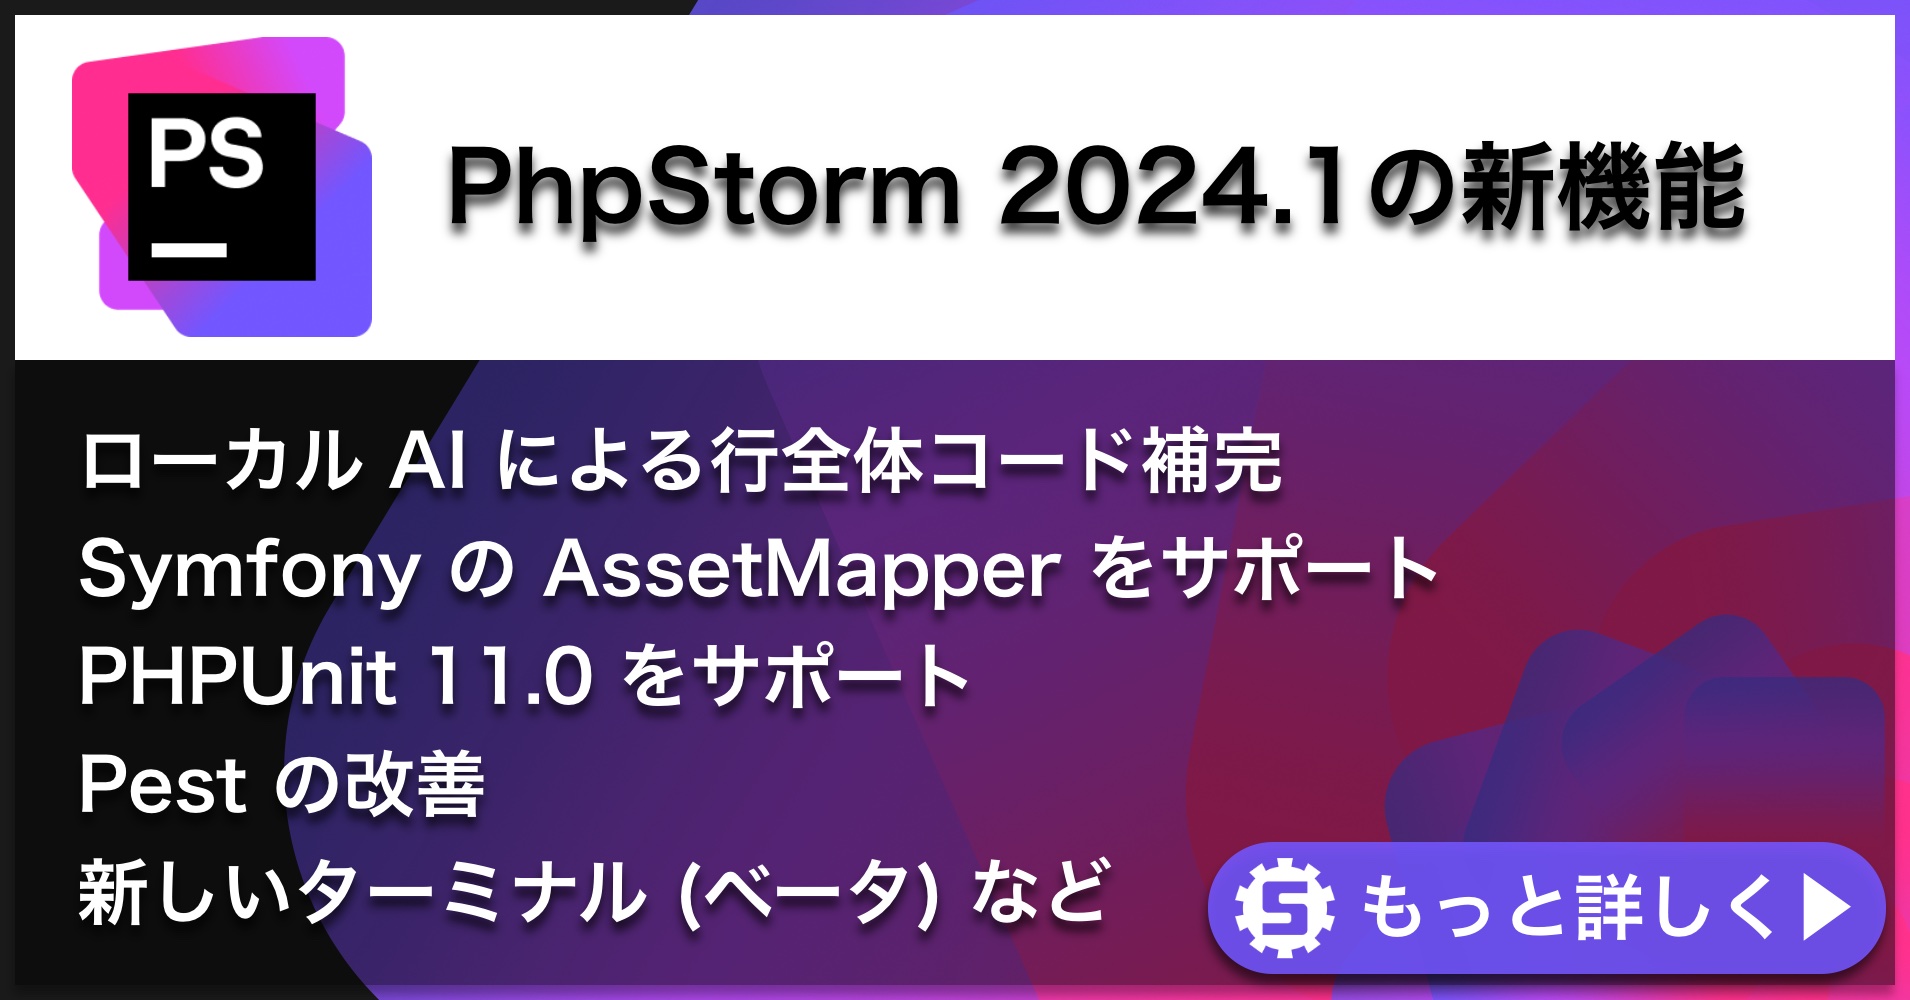 PhpStorm 2024.1の新機能